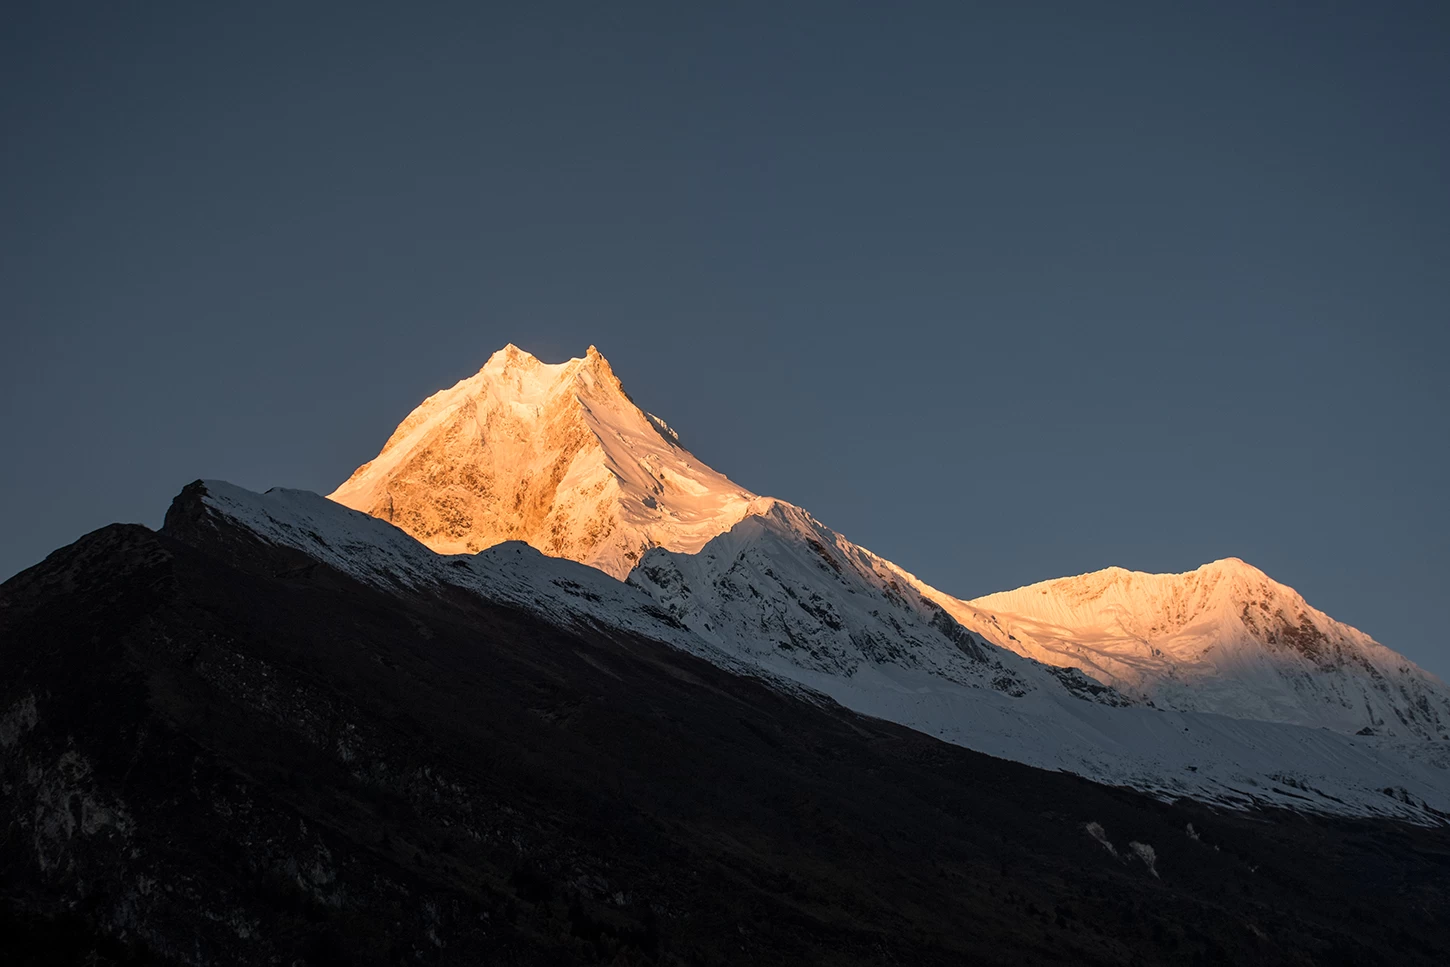  Mountain picture, Manaslu 